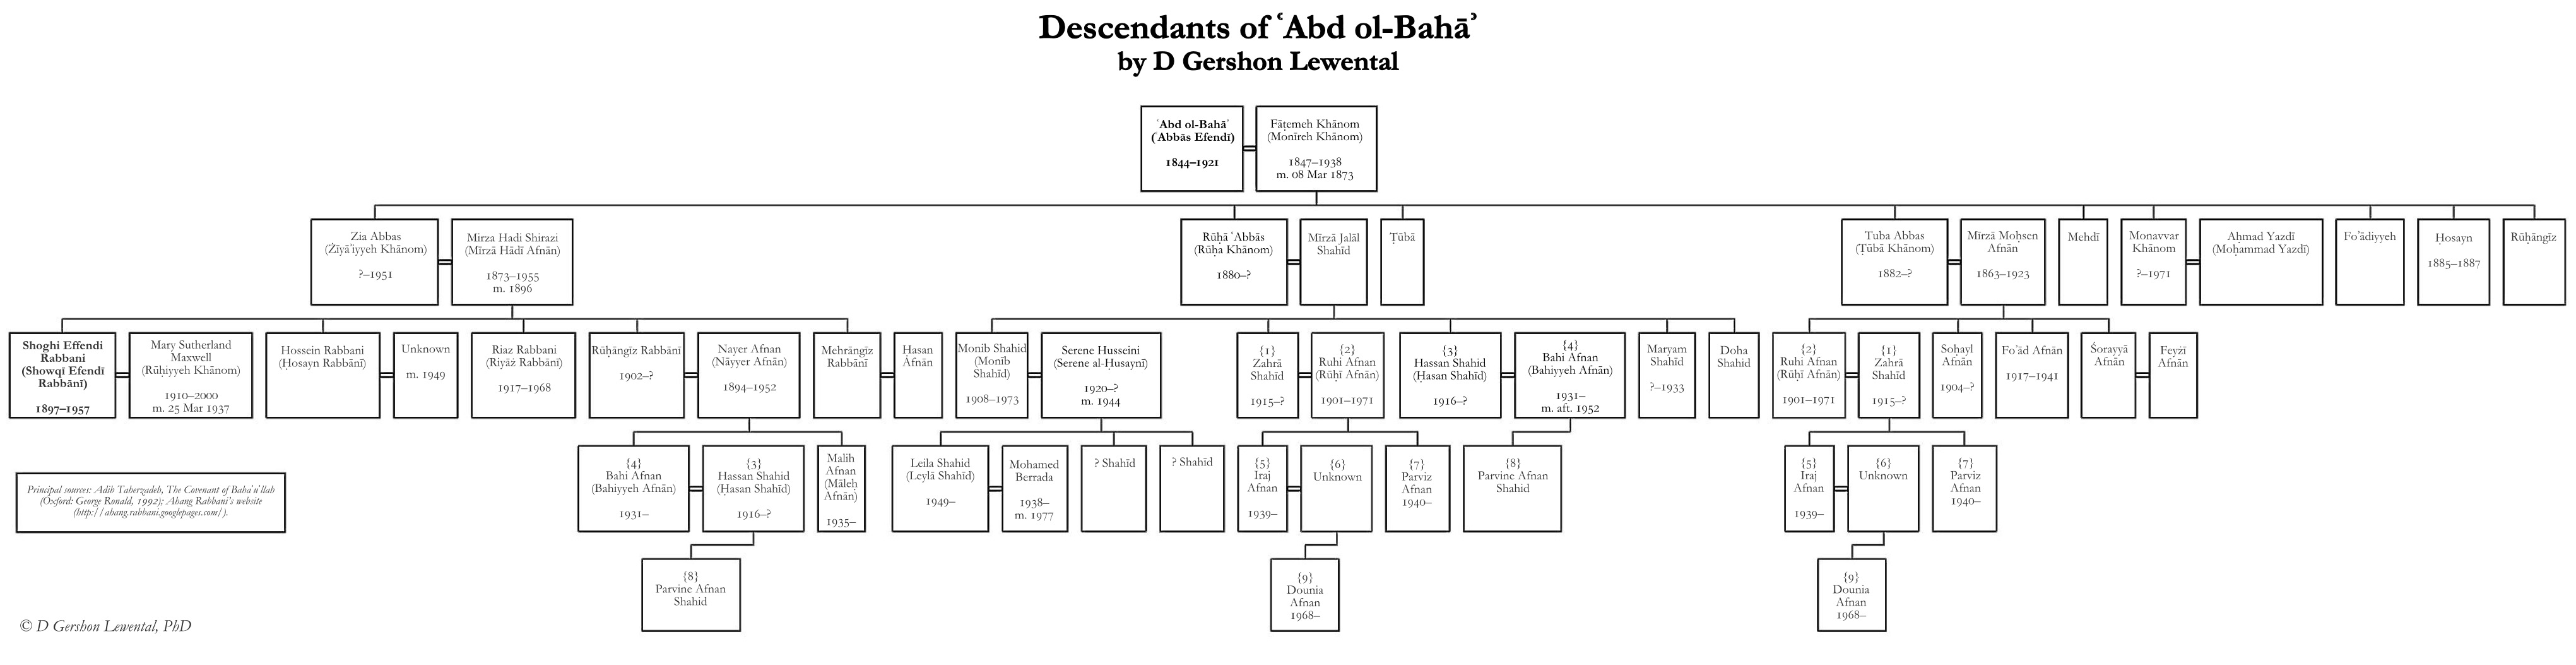 Descendants of ʿAbd ol-Bahāʾ